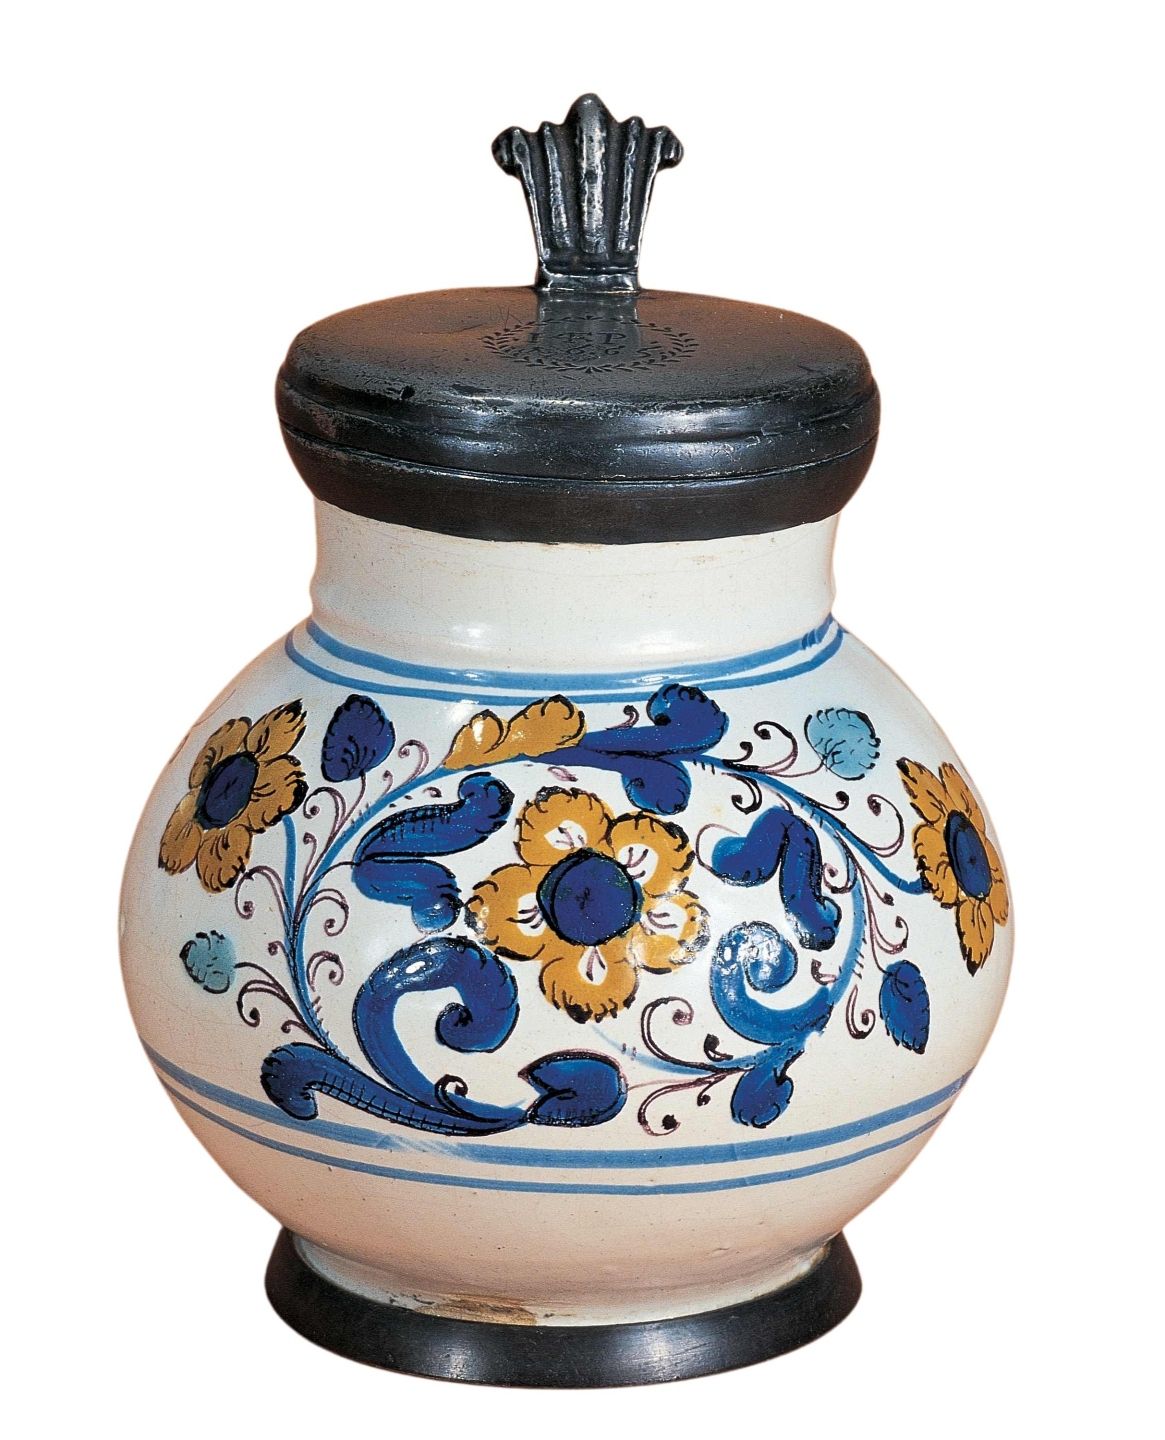 haban-faience-jug-dated-1662--polychrome-flower-decoration